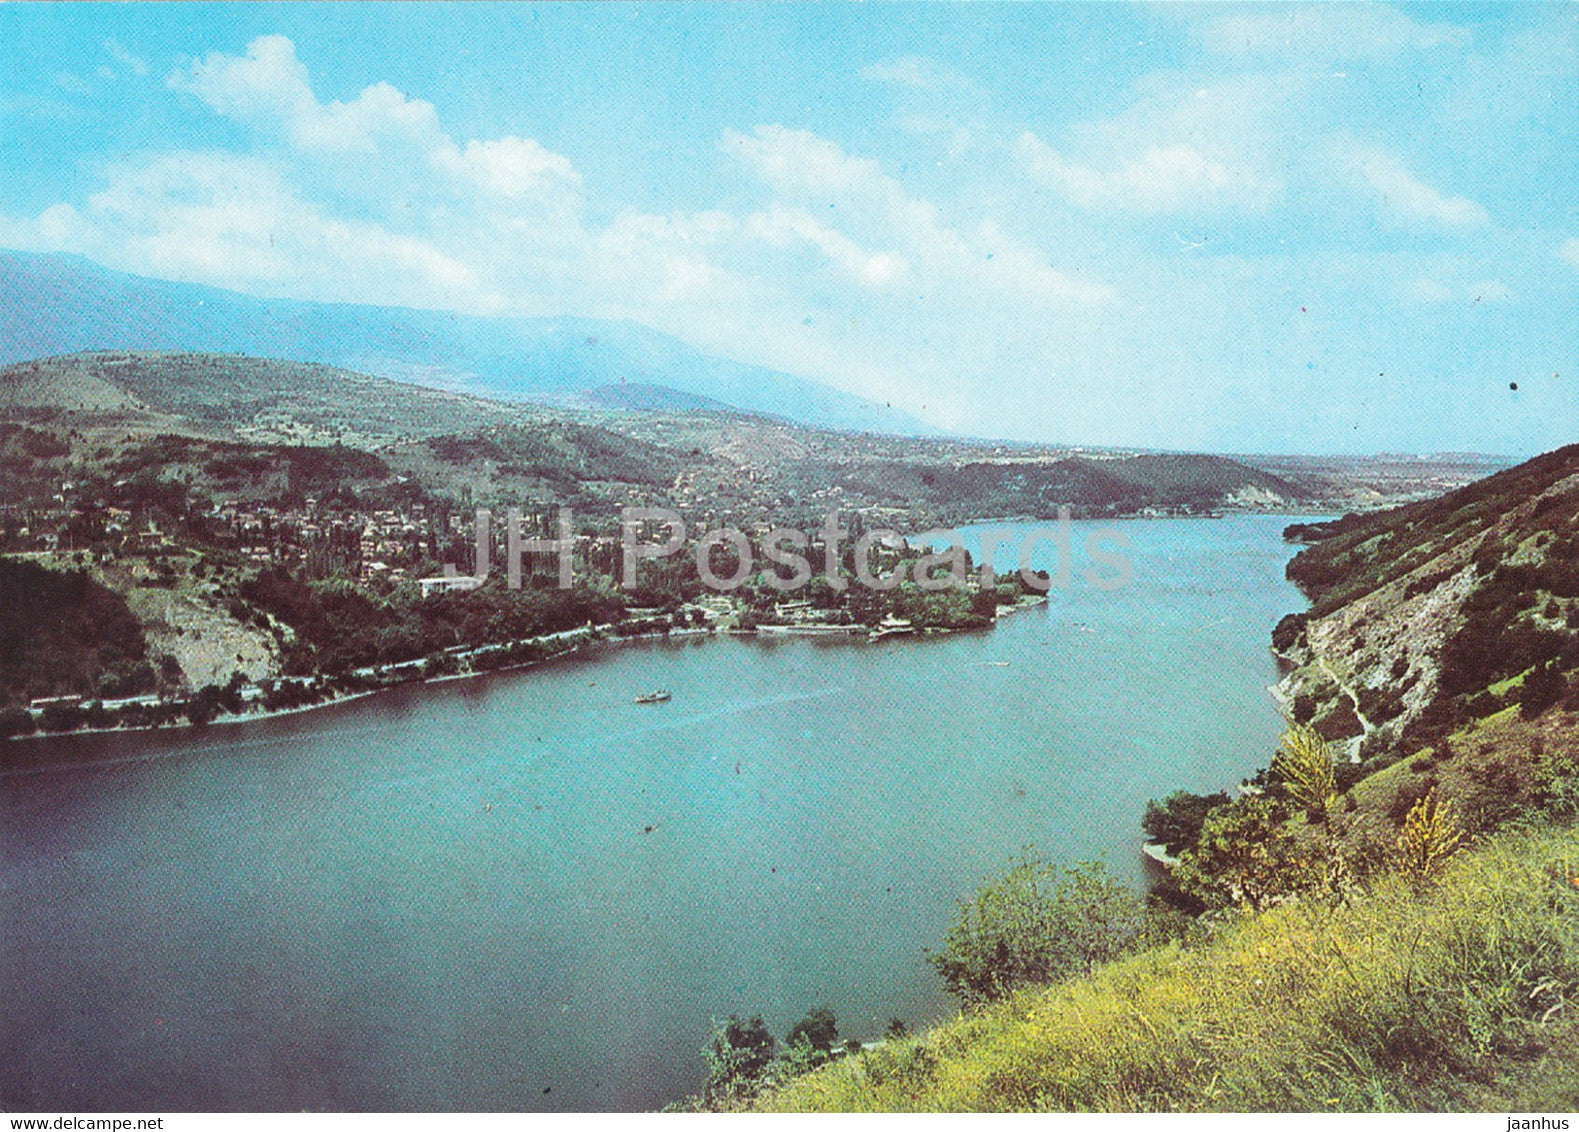 Lake Pancharevo - 1973 - Bulgaria - unused - JH Postcards